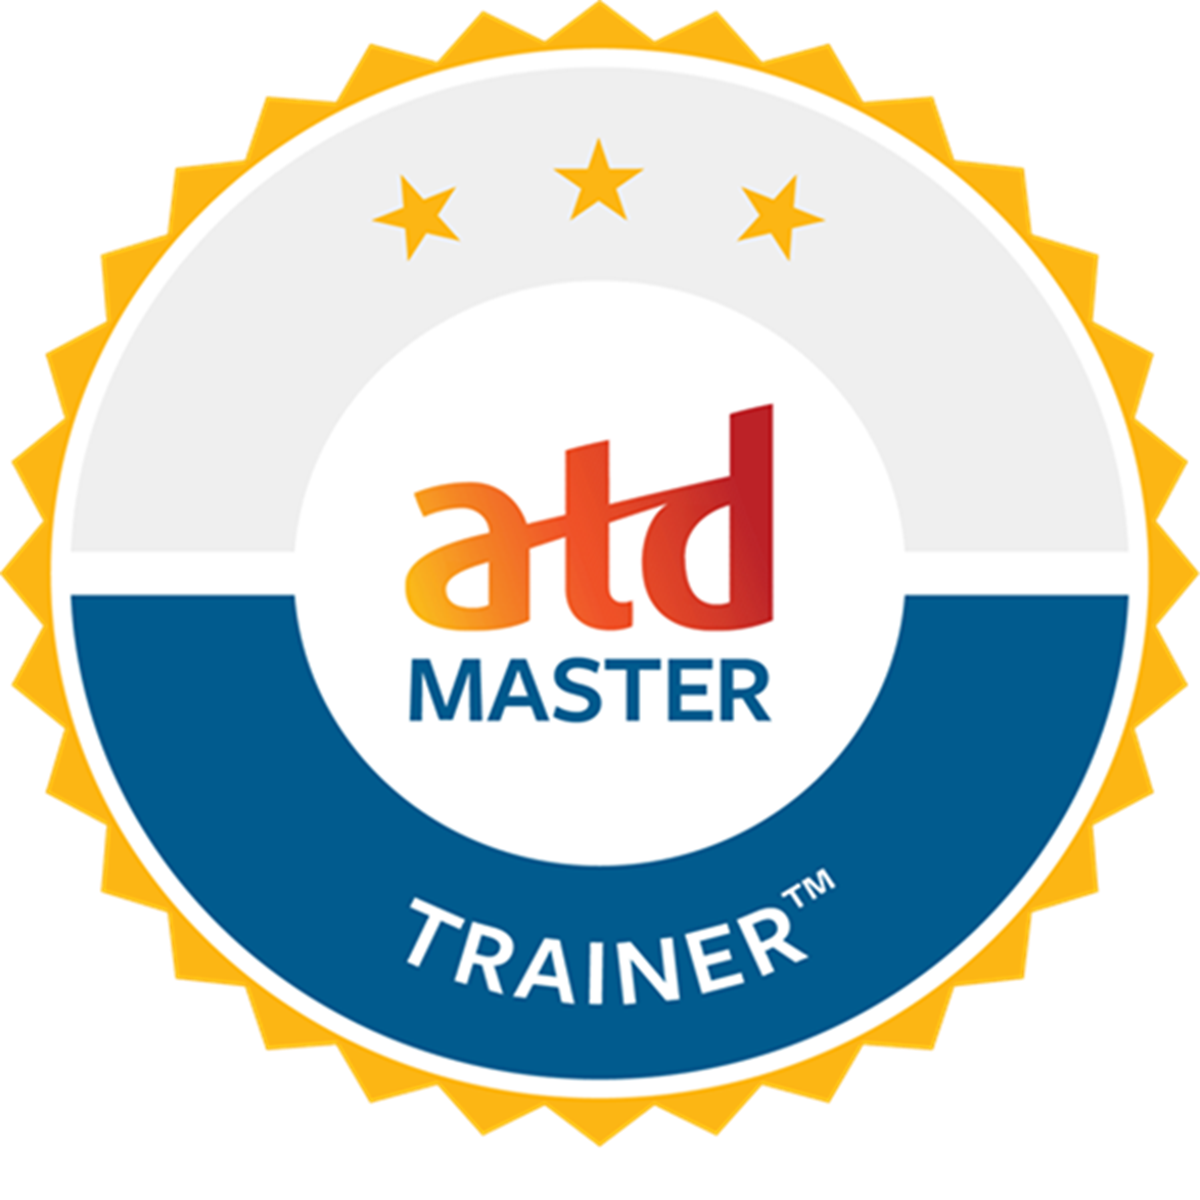 Expert Facilitator of the ATD Master Trainer program